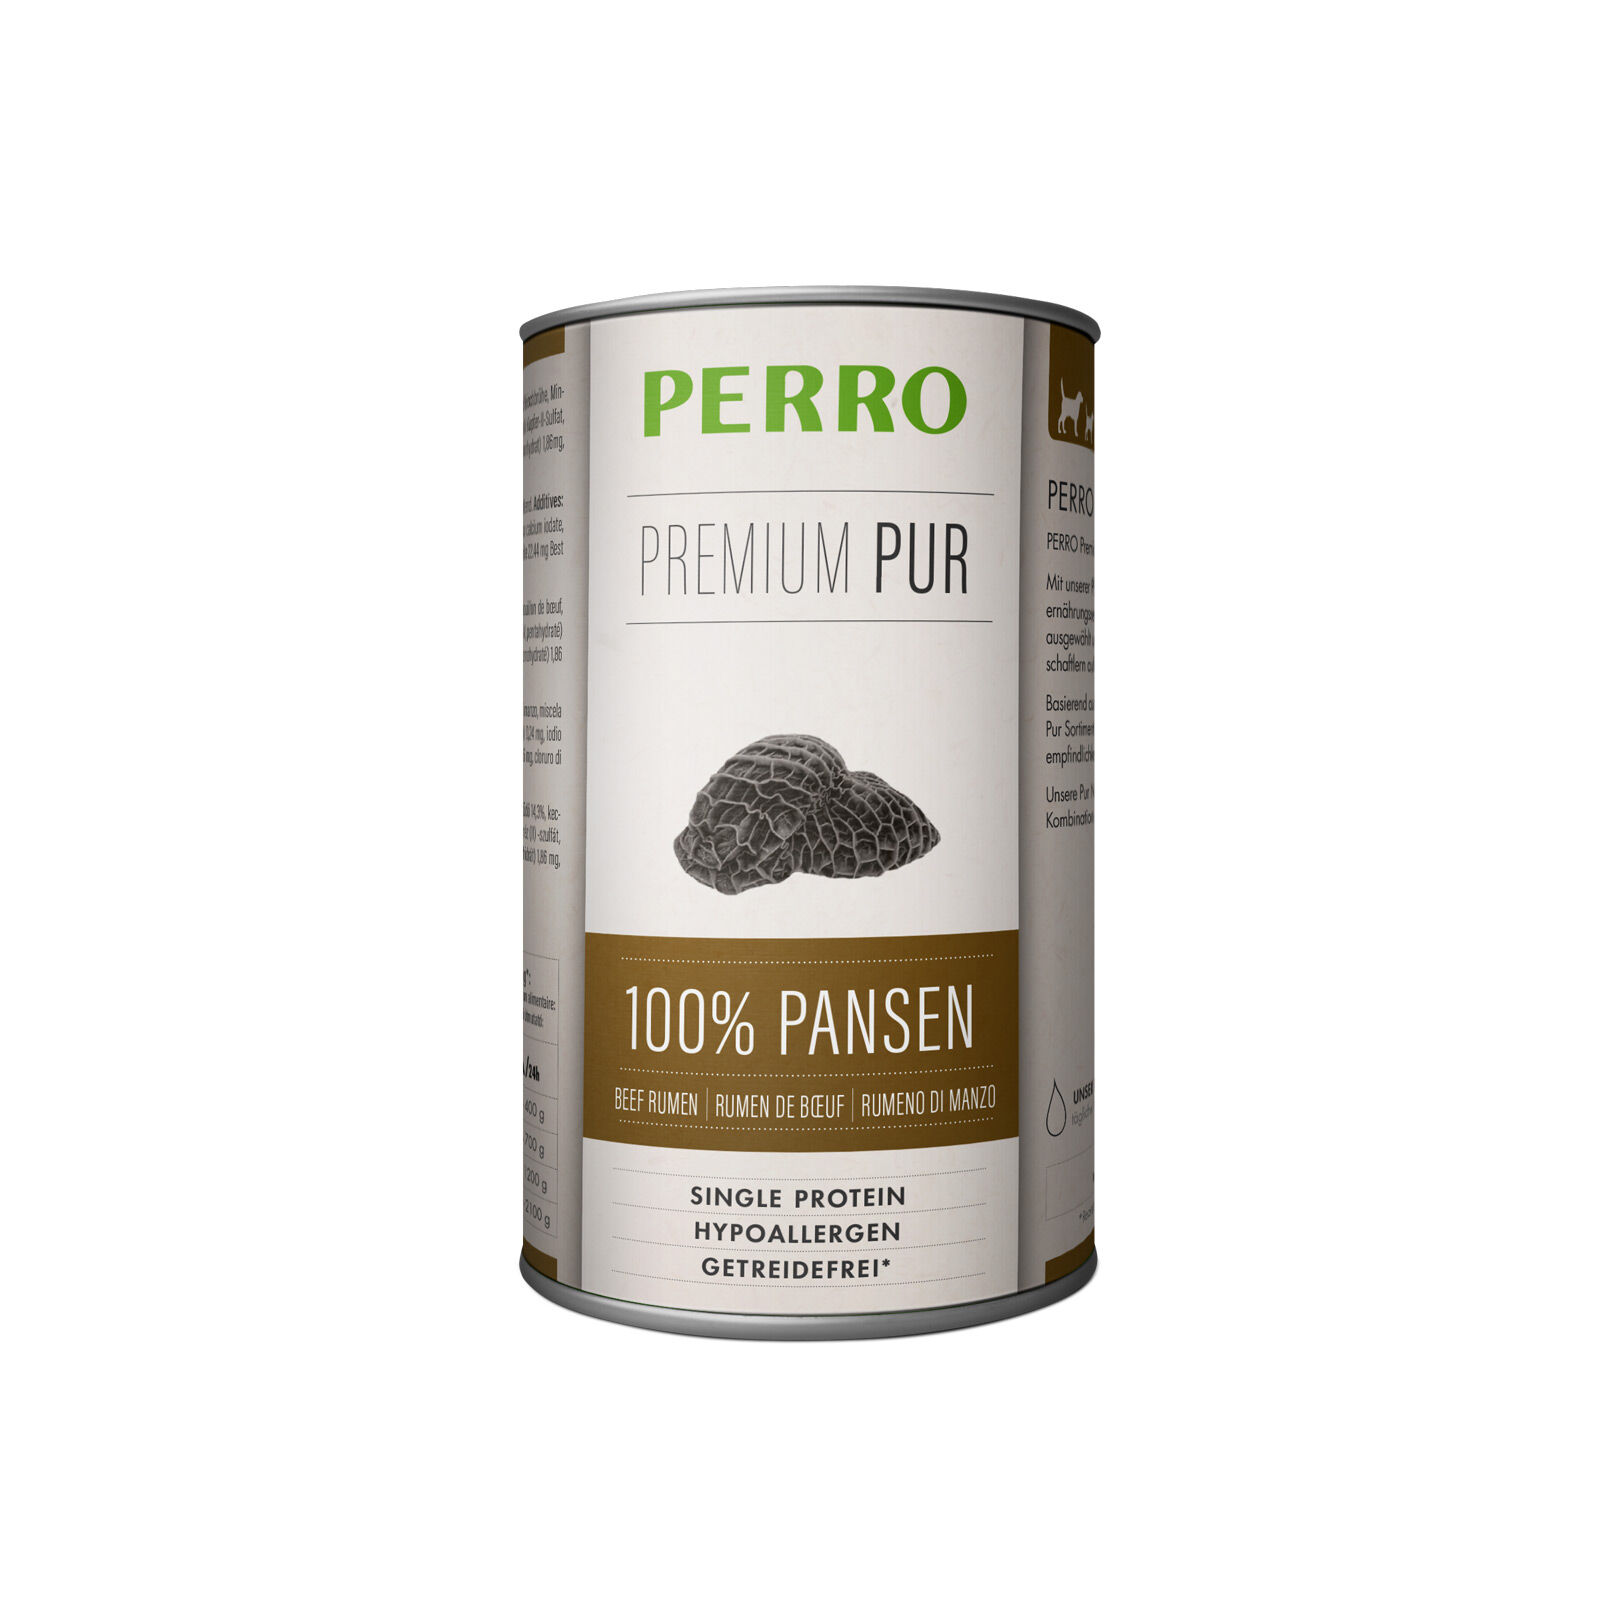 181203-PERRO-410g-Premium-Pur-Pansen-Nassfutter-Hund